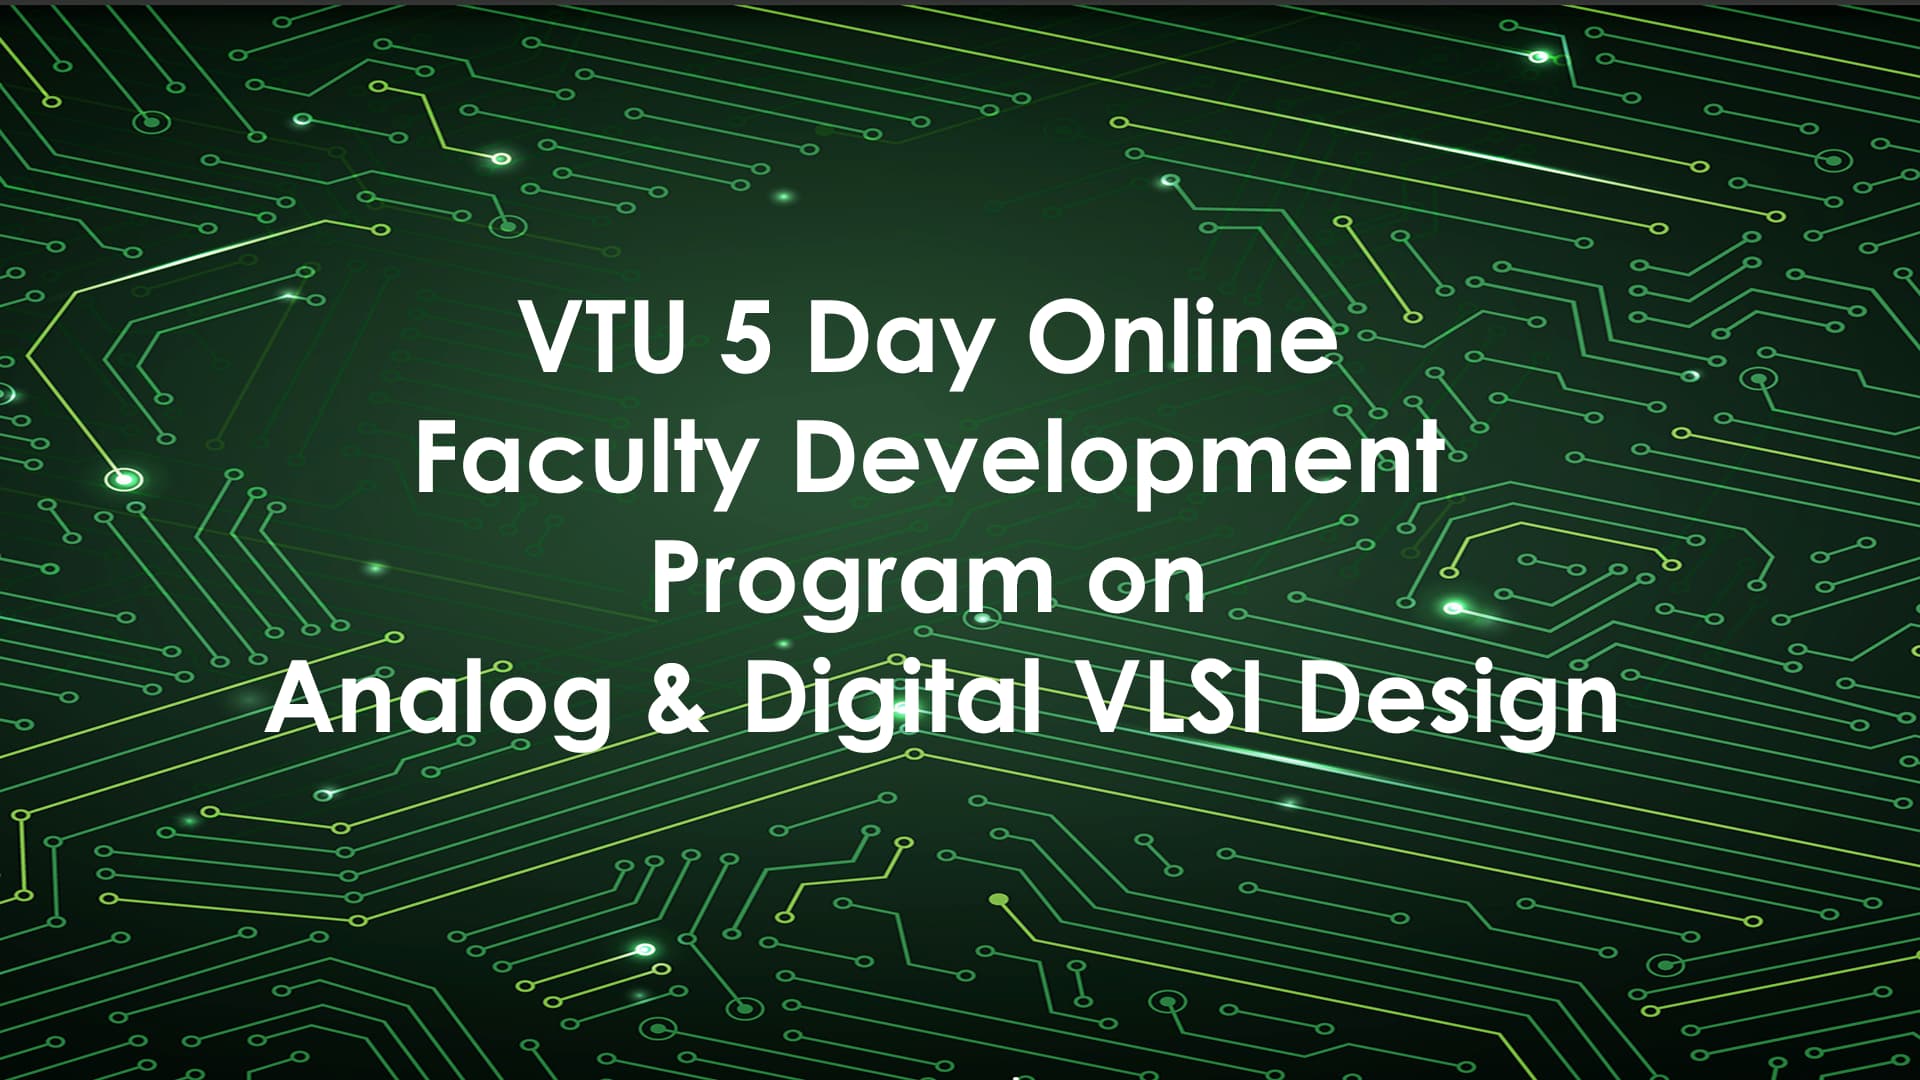 VTU 5 Day Online Faculty Development Program on Analog & Digital VLSI Design